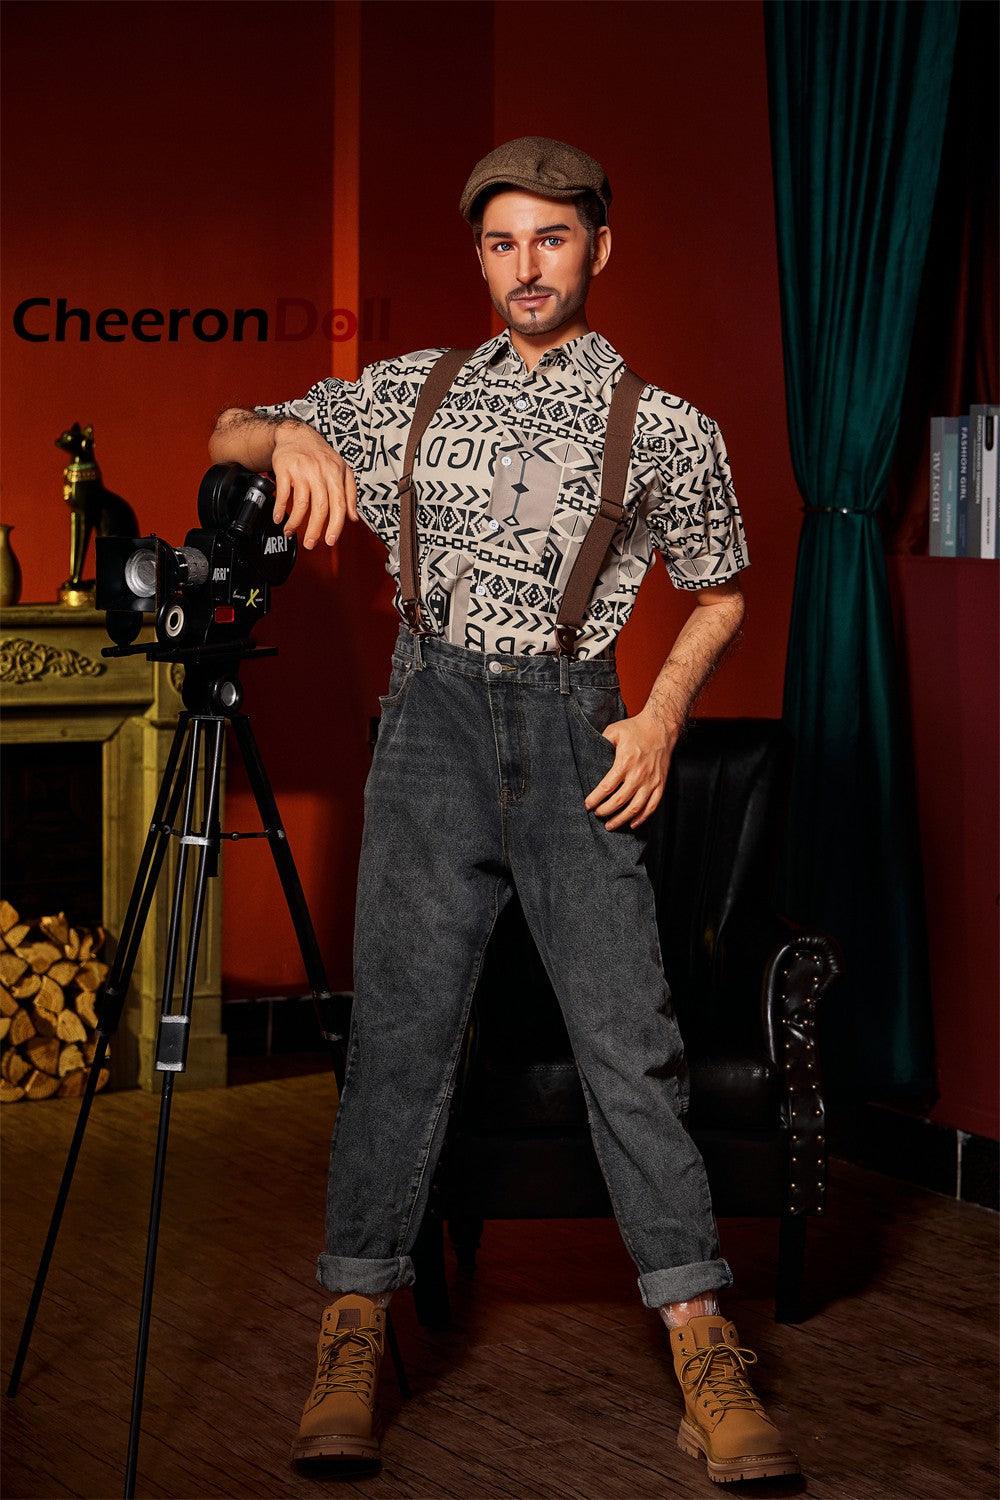 CHEERONDOLL SILICONE 170CM REALISTIC MALE SEX DOLLS M3 GEORGE - Cheeron Doll